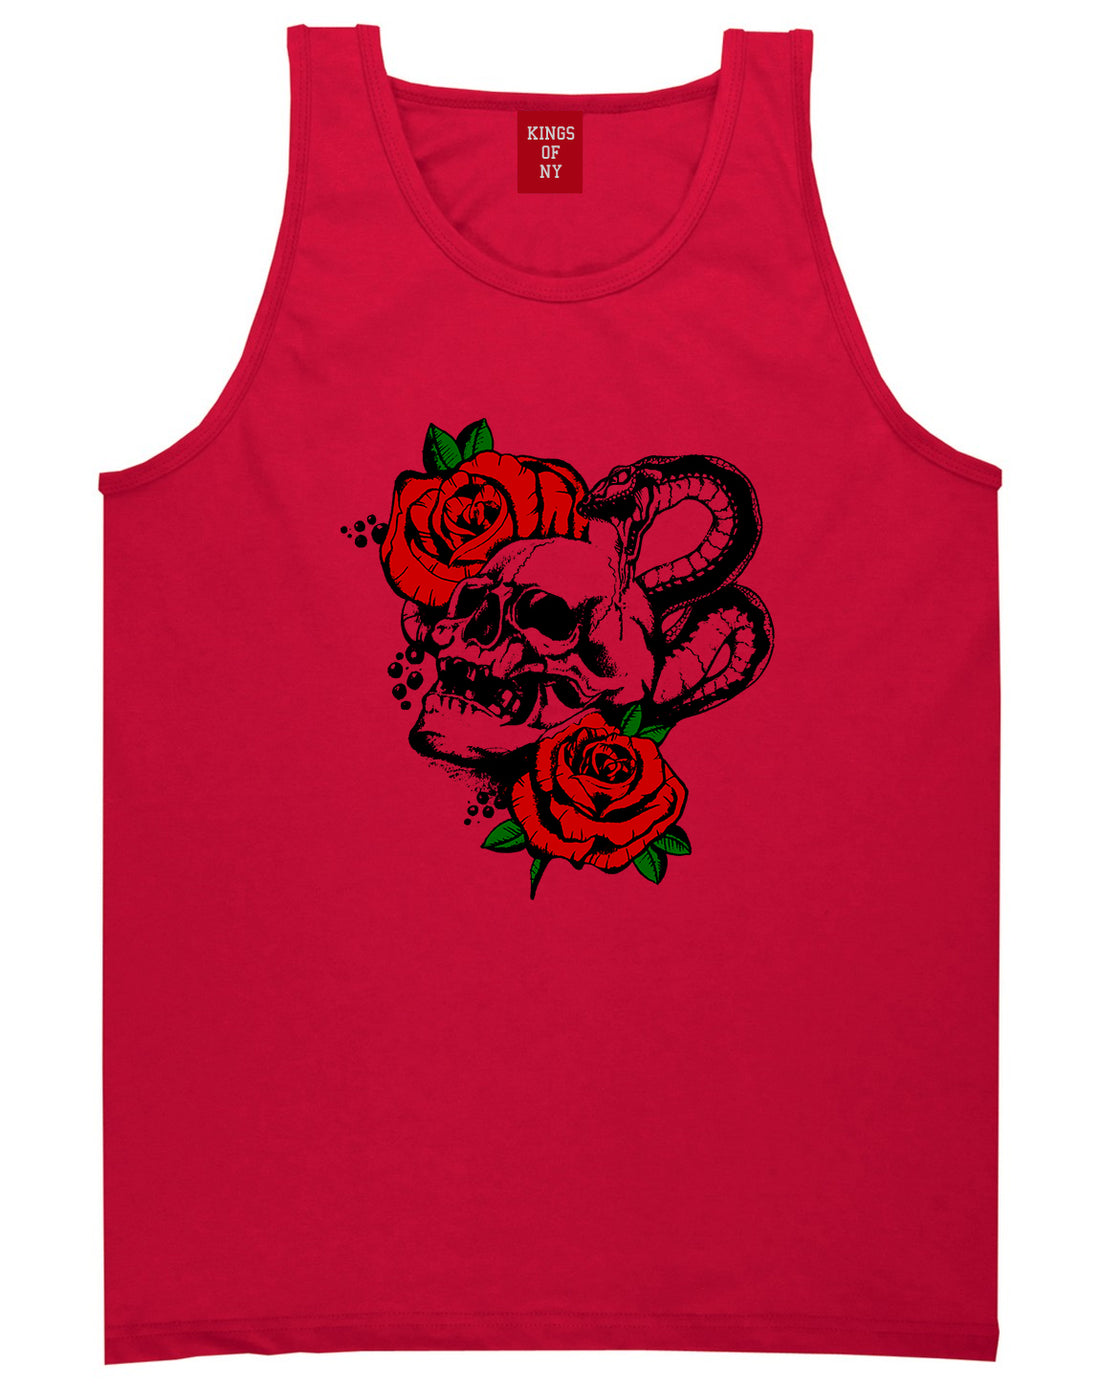 Skull And Roses Mens Tank Top Shirt Red